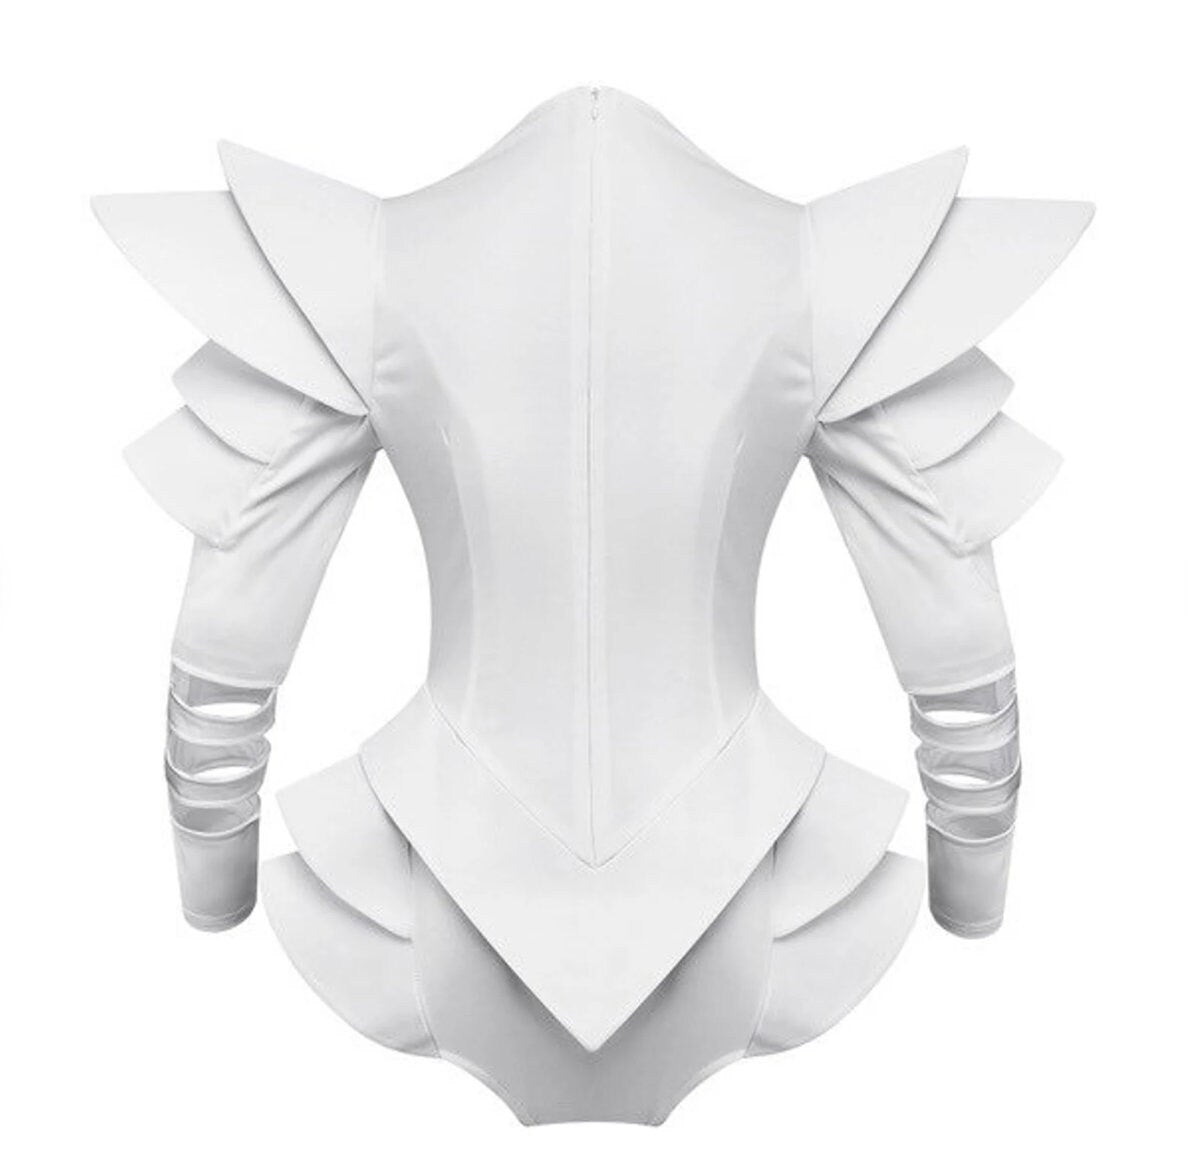 Leeloo SciFi Dress / Geometric Lady Gaga Costume / Futuristic Alien Space Girl / Cutout Shoulders Mesh Cosplay Catsuit